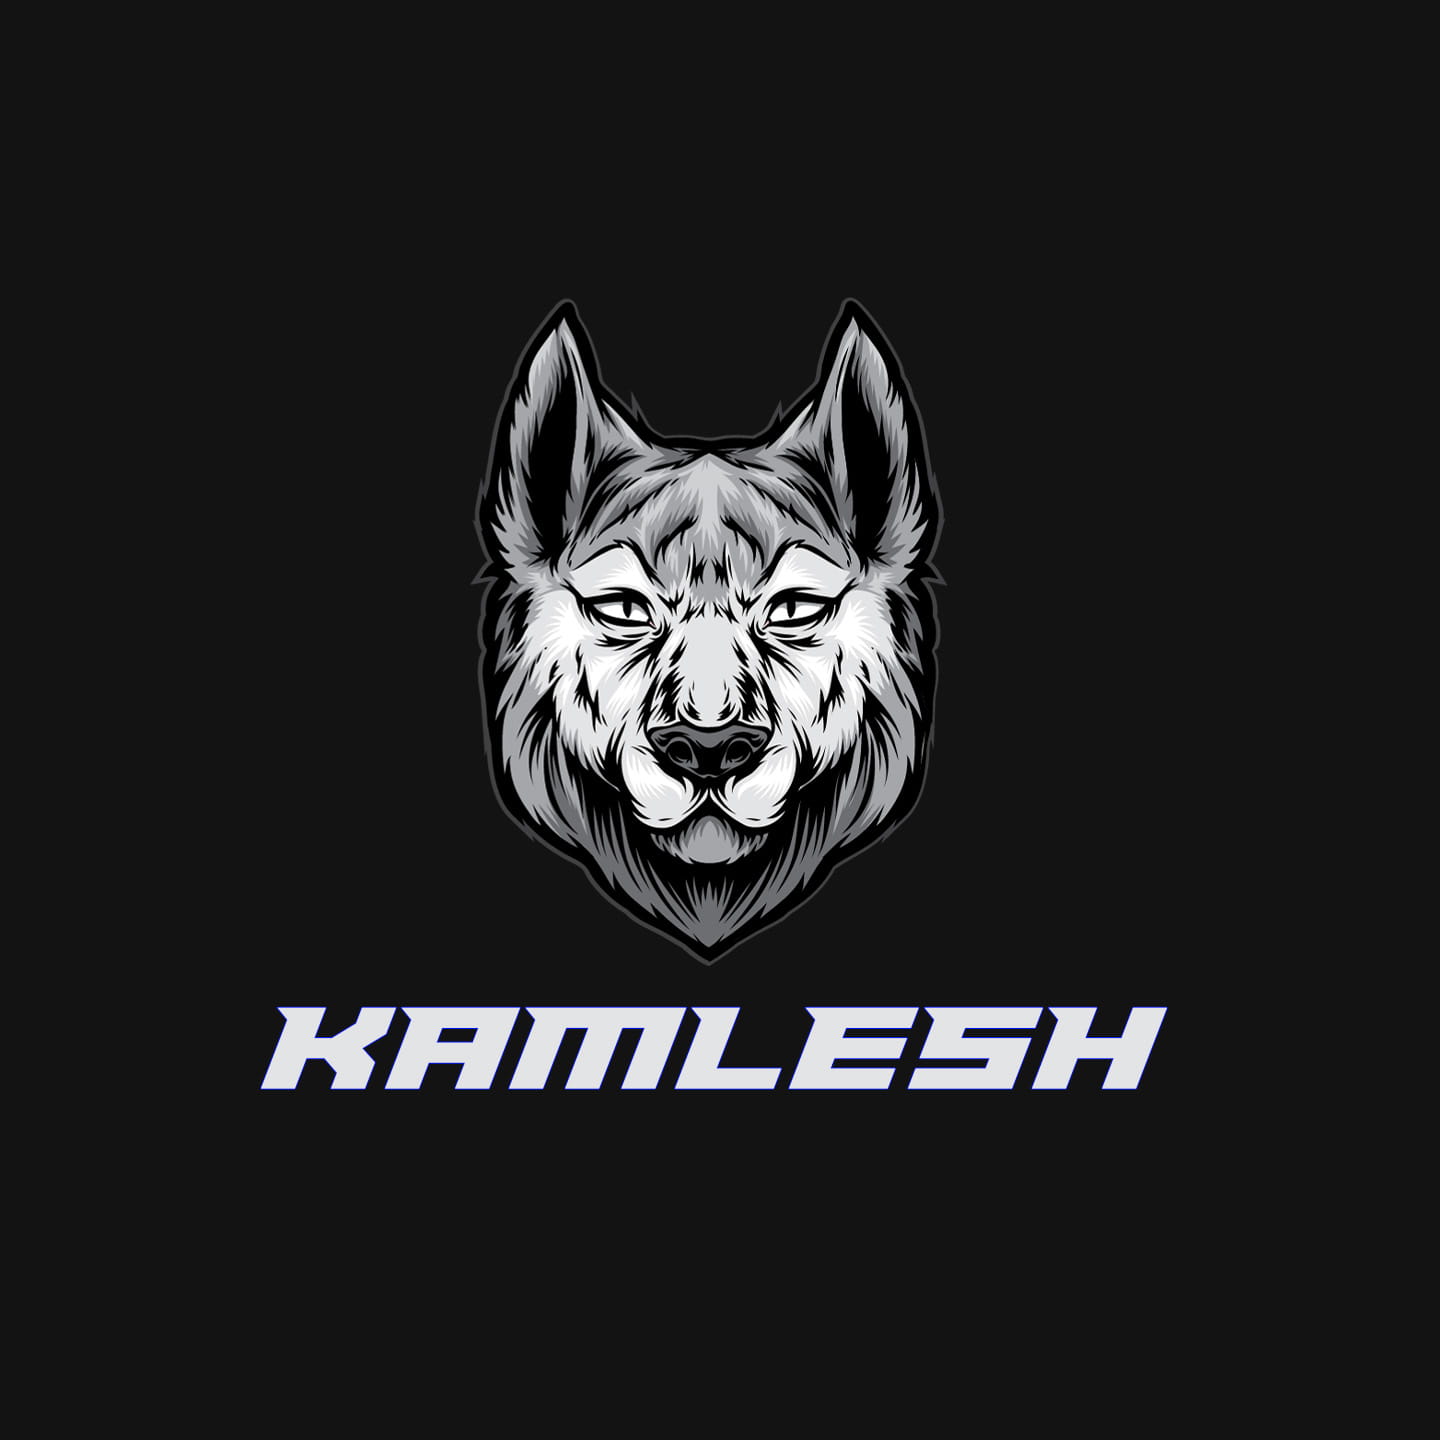 Kameelah Logo | Free Name Design Tool from Flaming Text